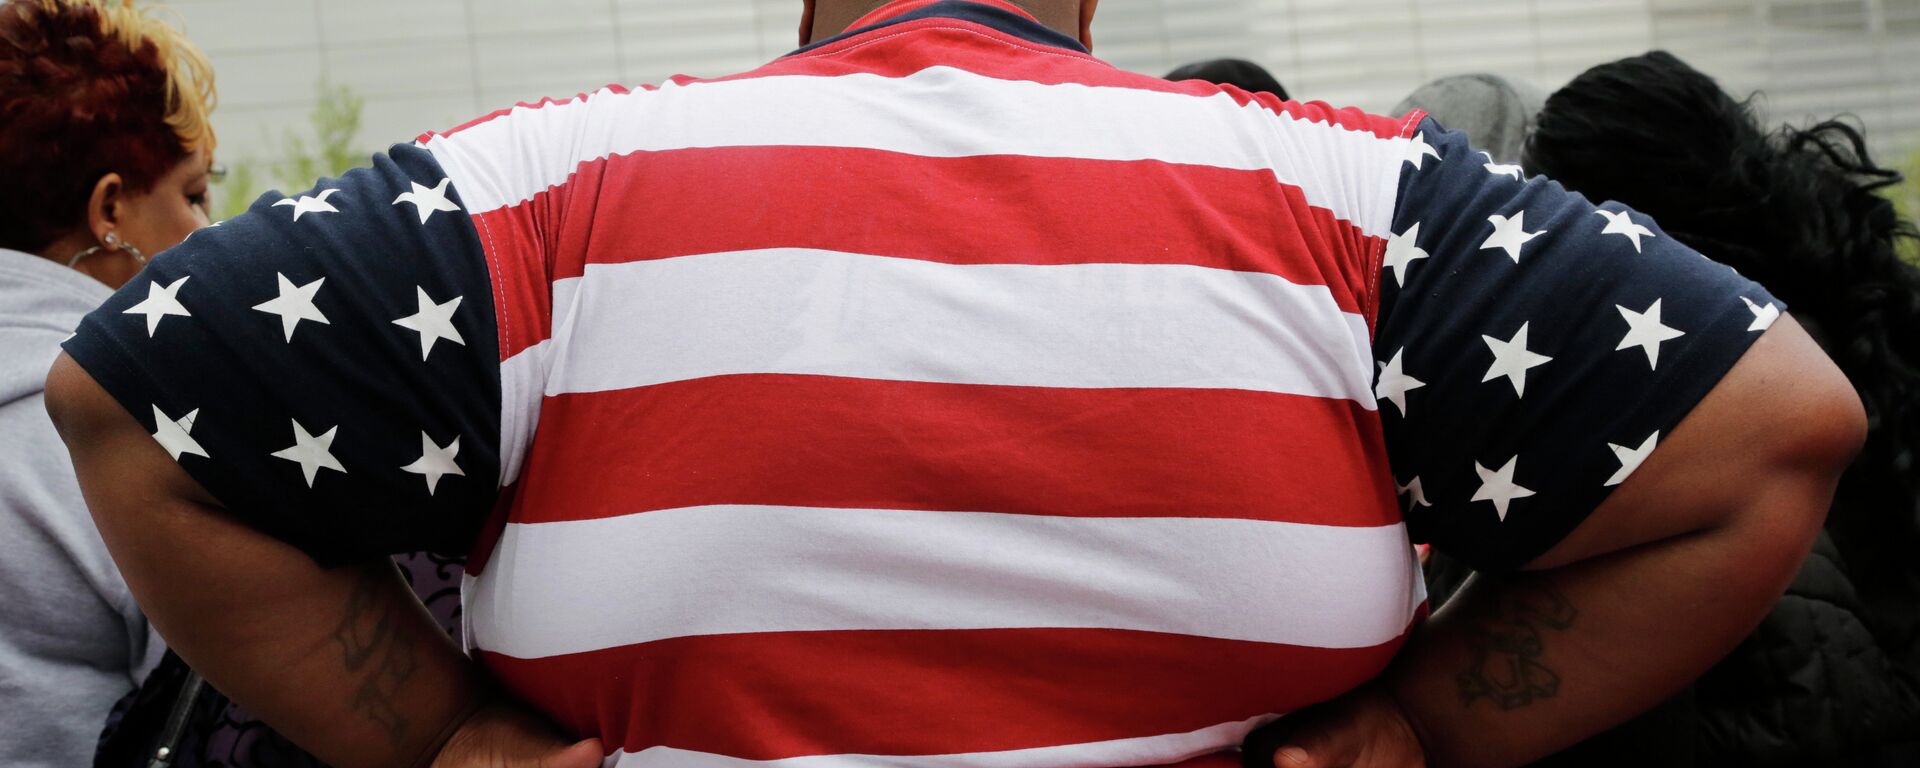 Overweight man wears a shirt patterned after the American flag - Sputnik International, 1920, 15.09.2021